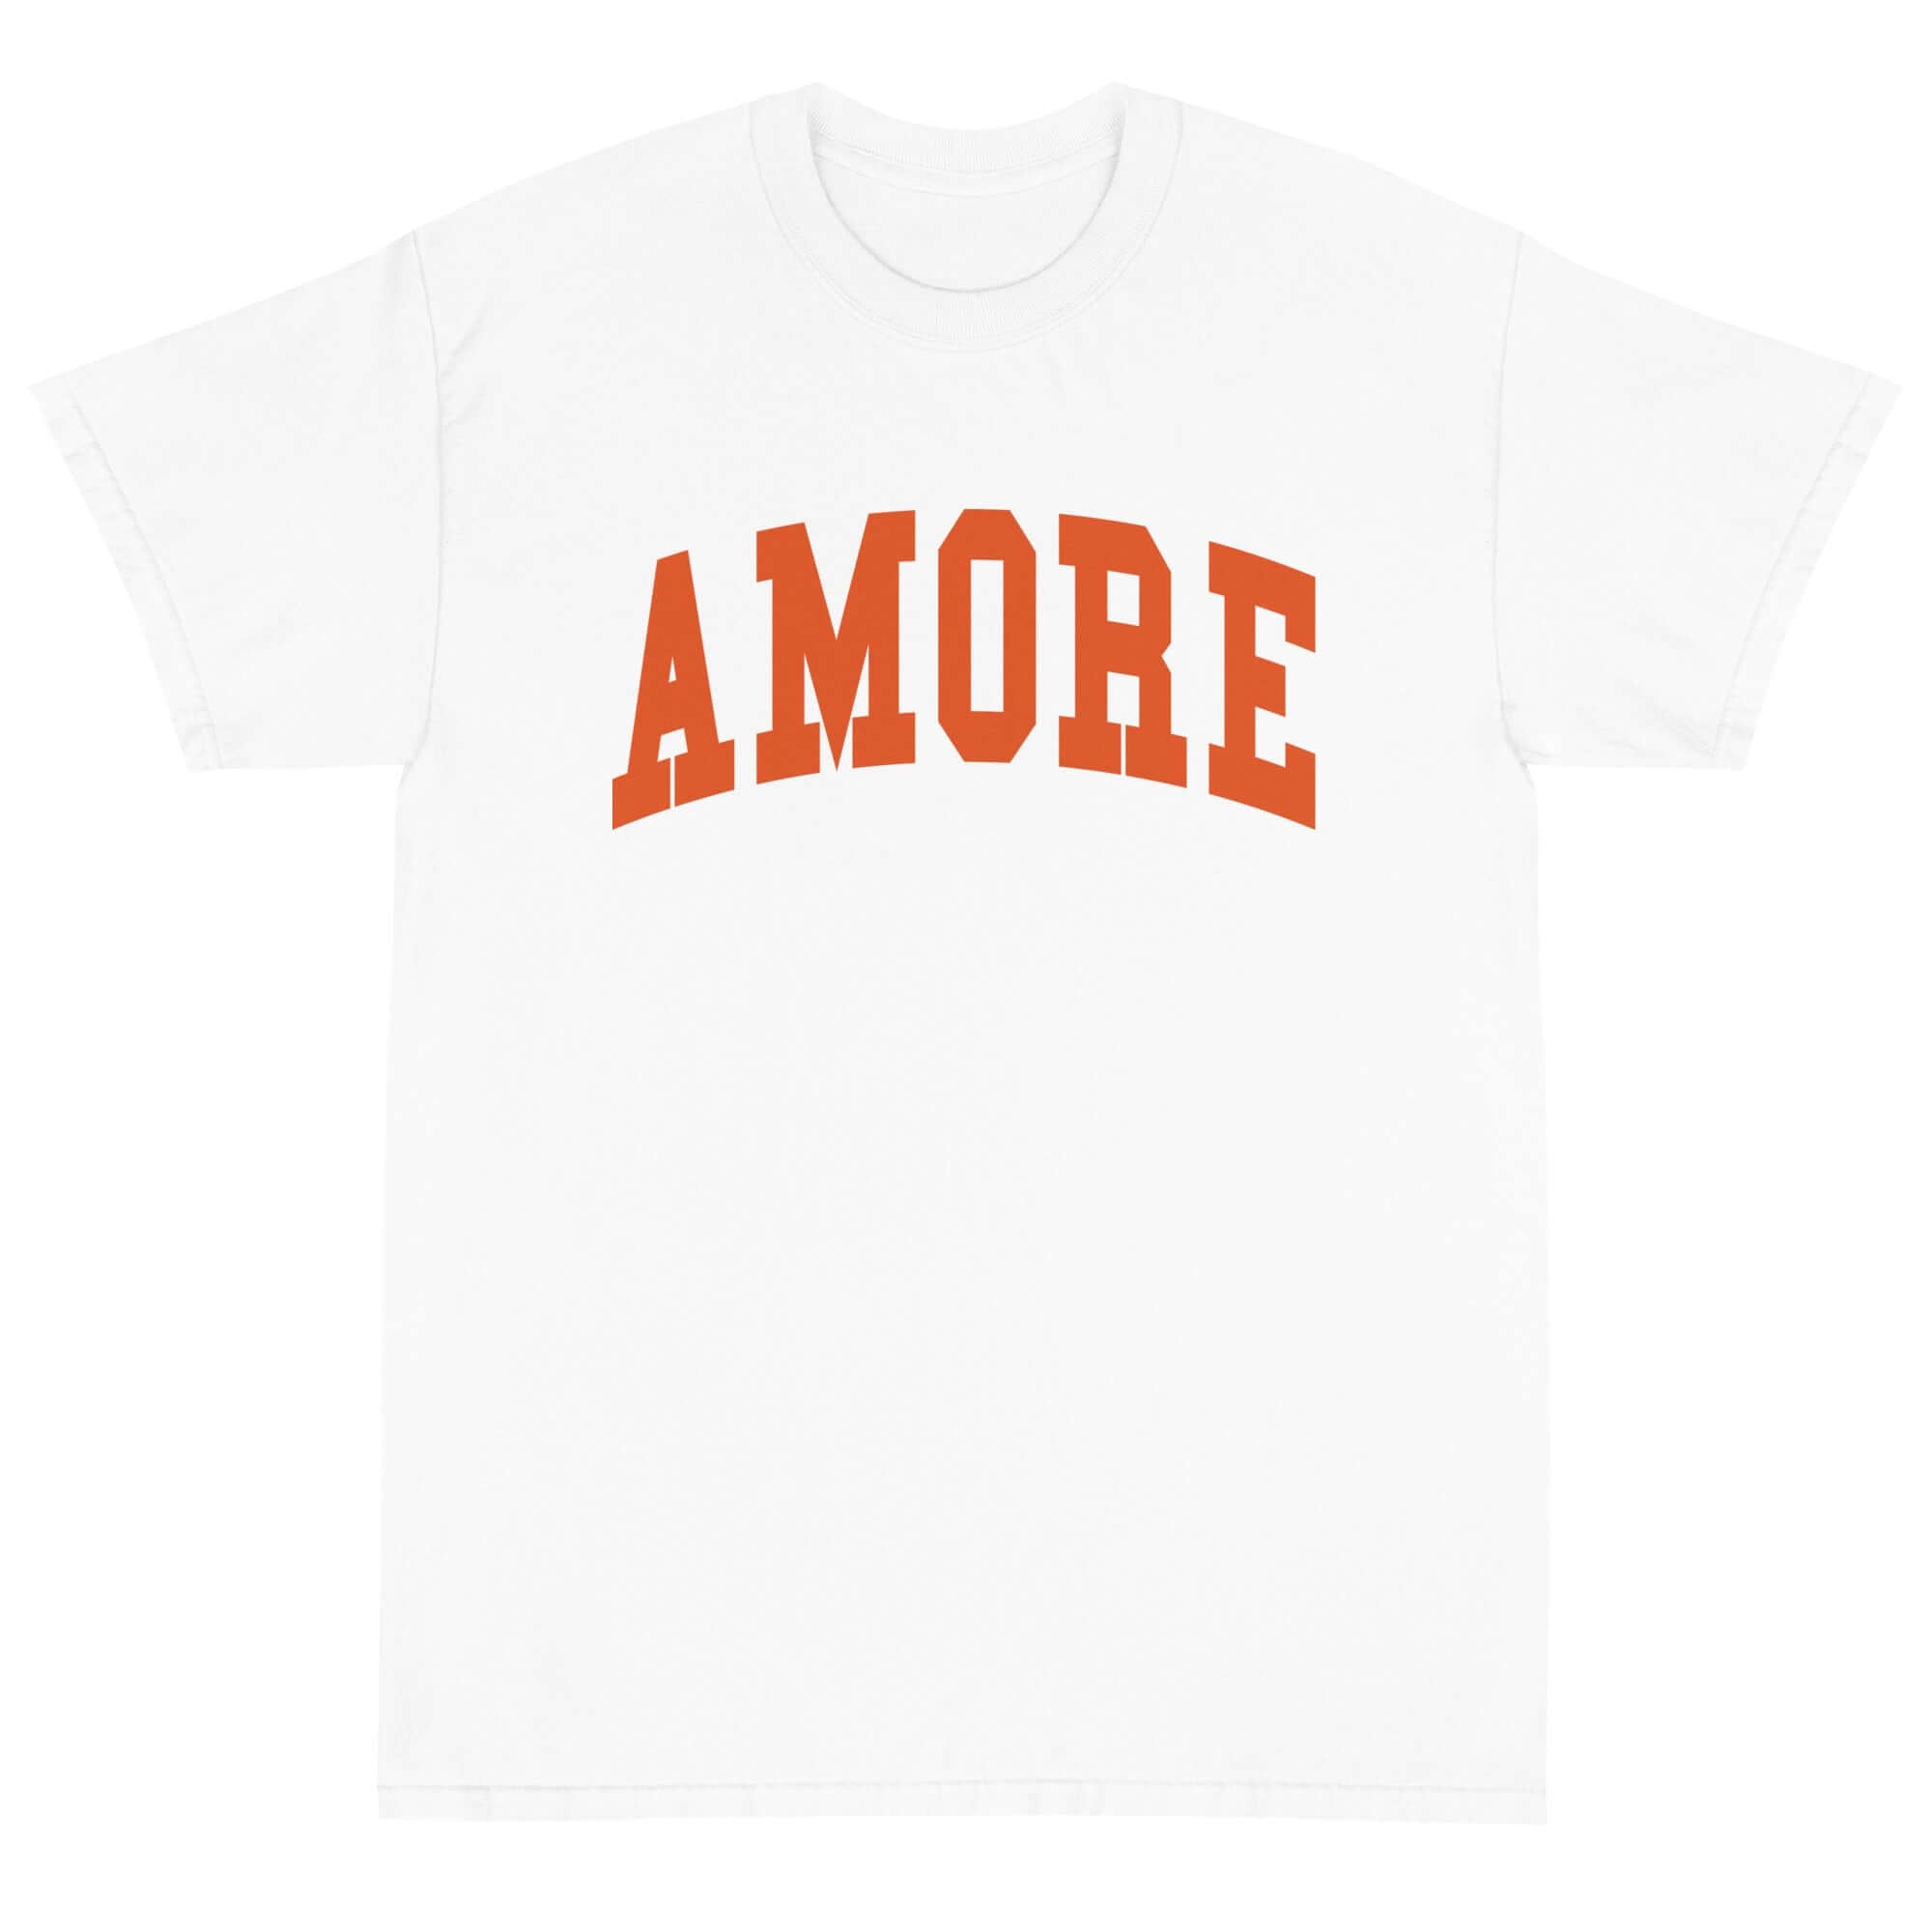 Amore - Custom t-shirt - The Refined Spirit